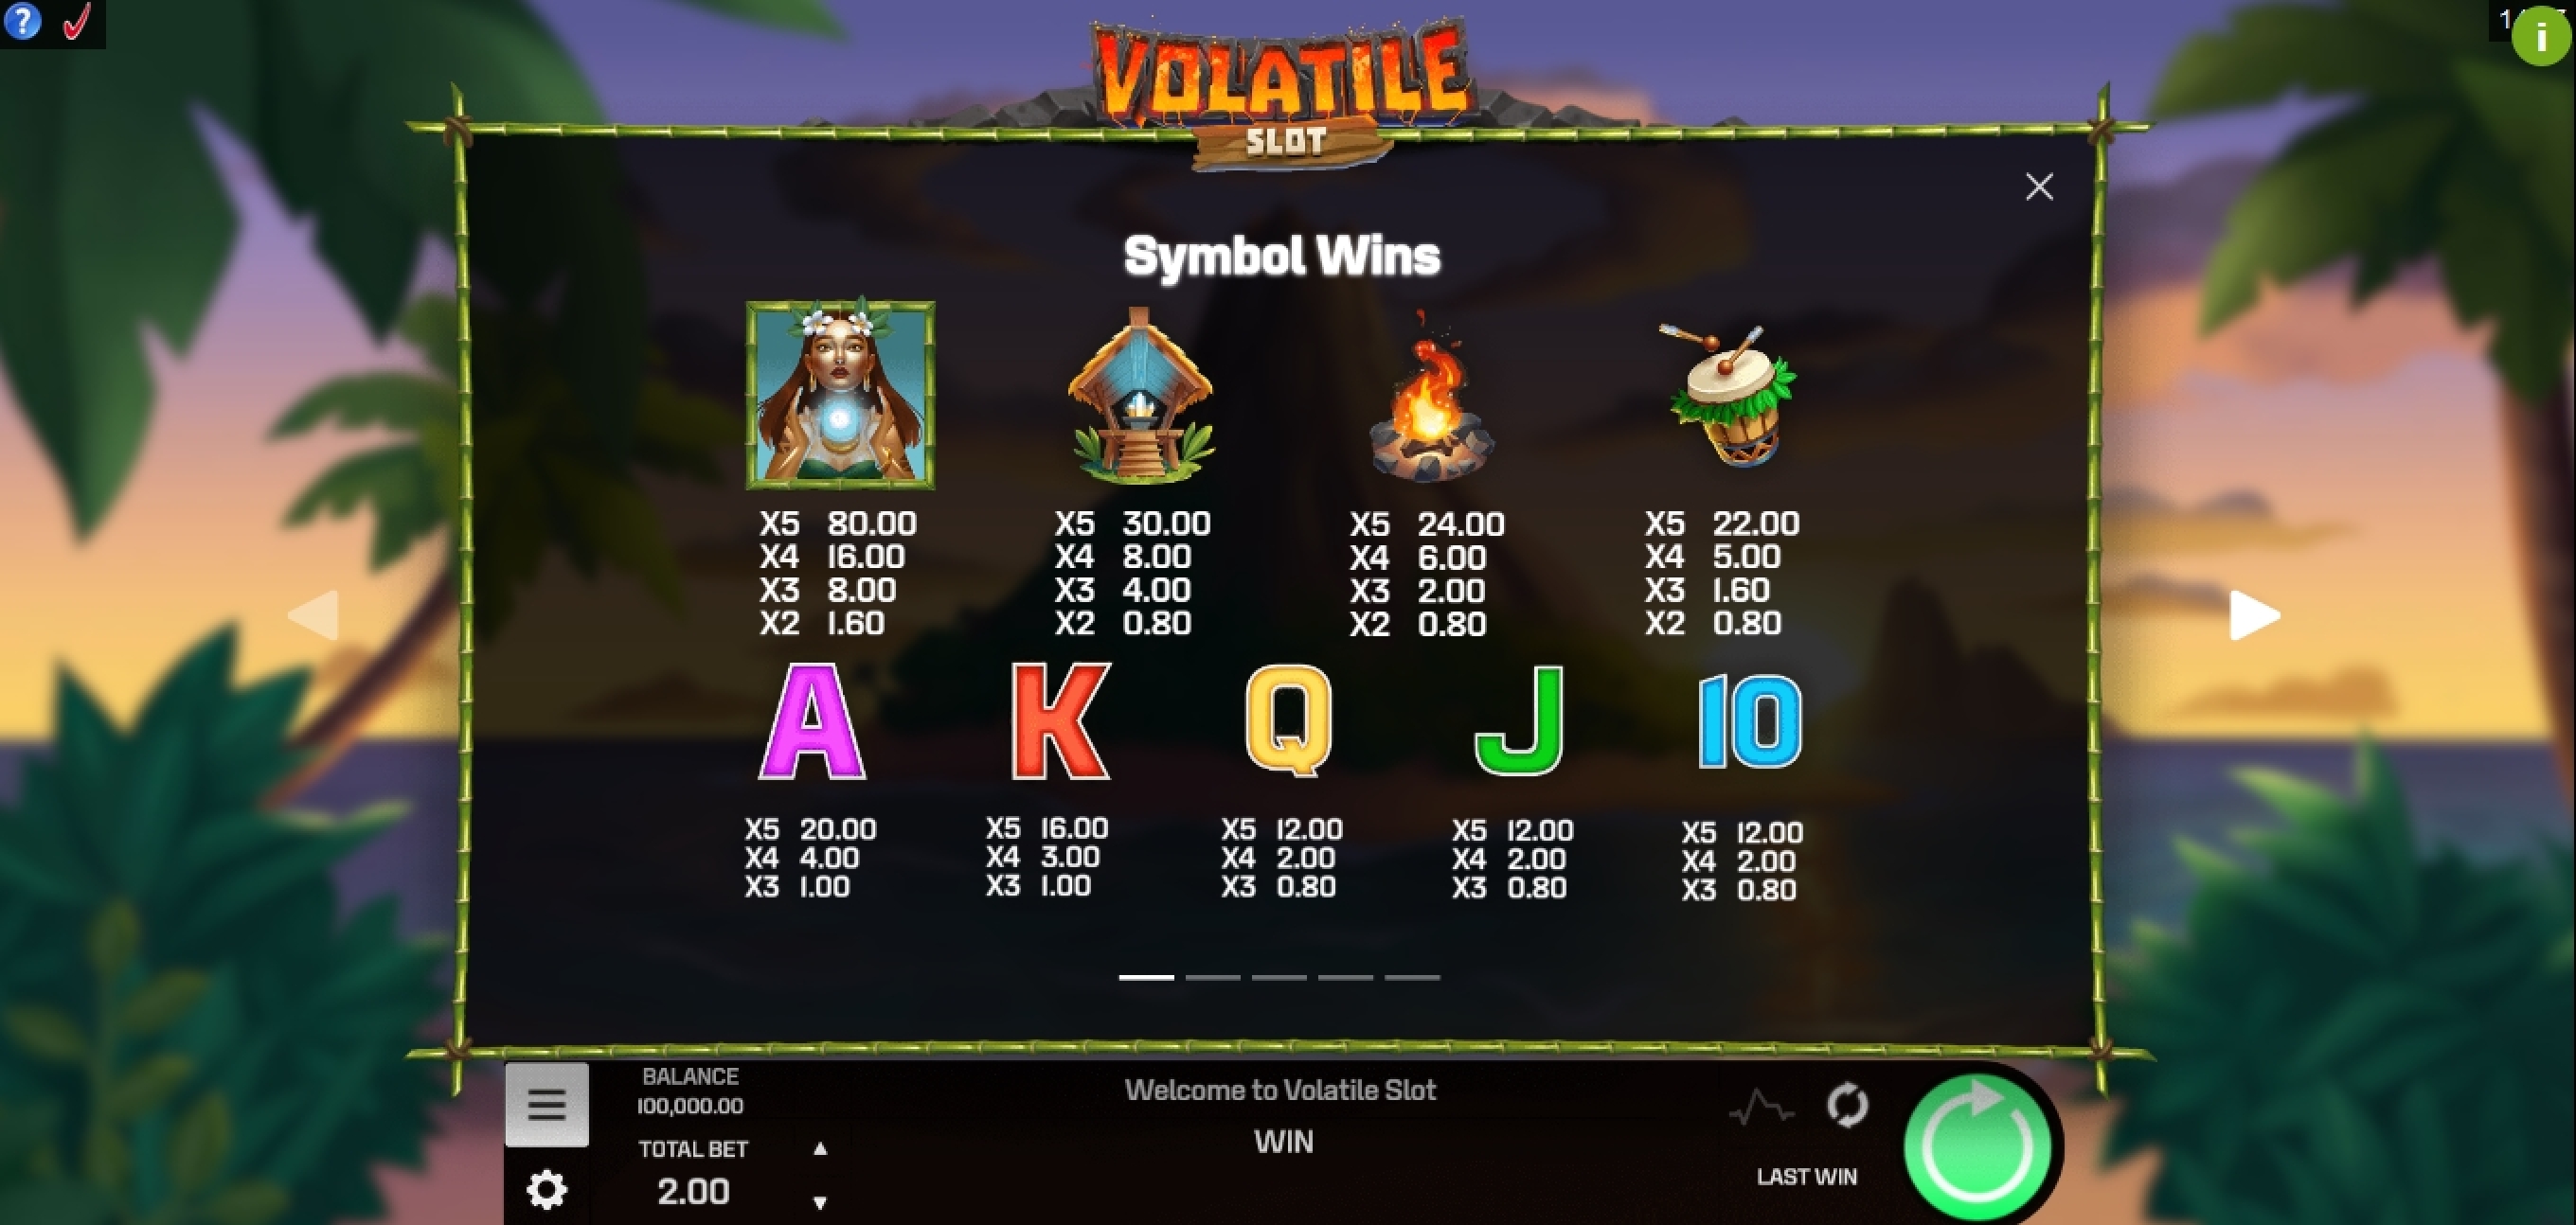 Info of Volatile Slot Slot Game by Golden Rock Studios